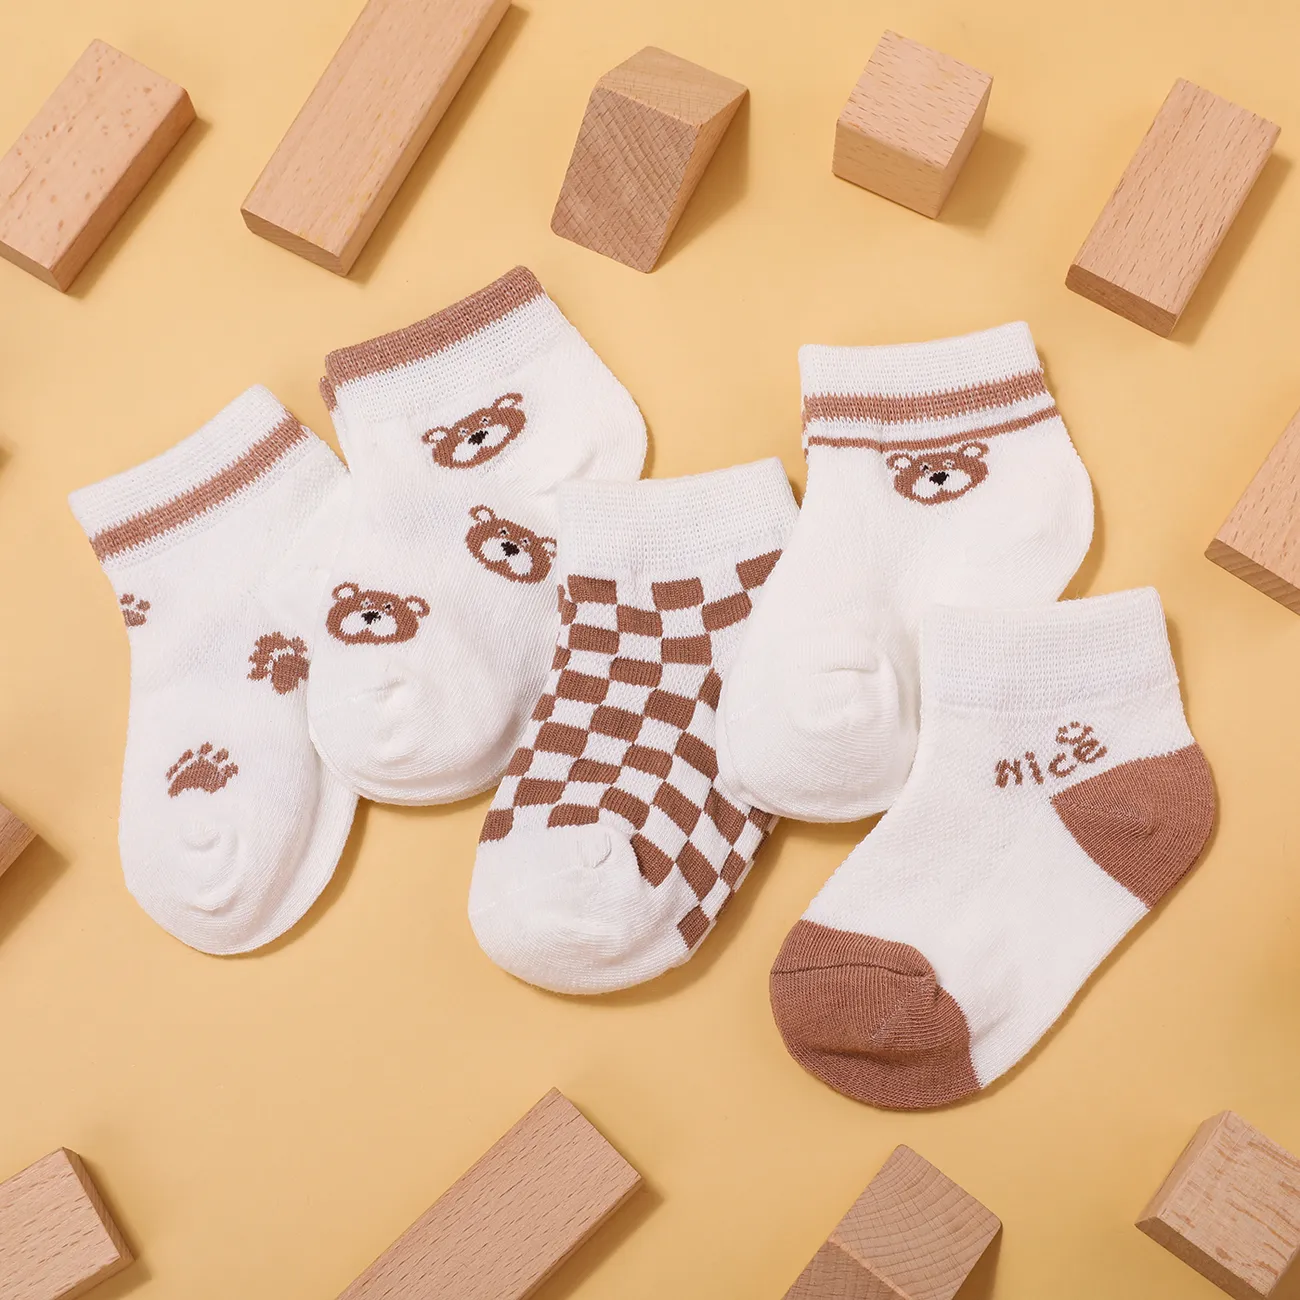  Calcetines Kawaii para bebé, 5 pares de calcetines